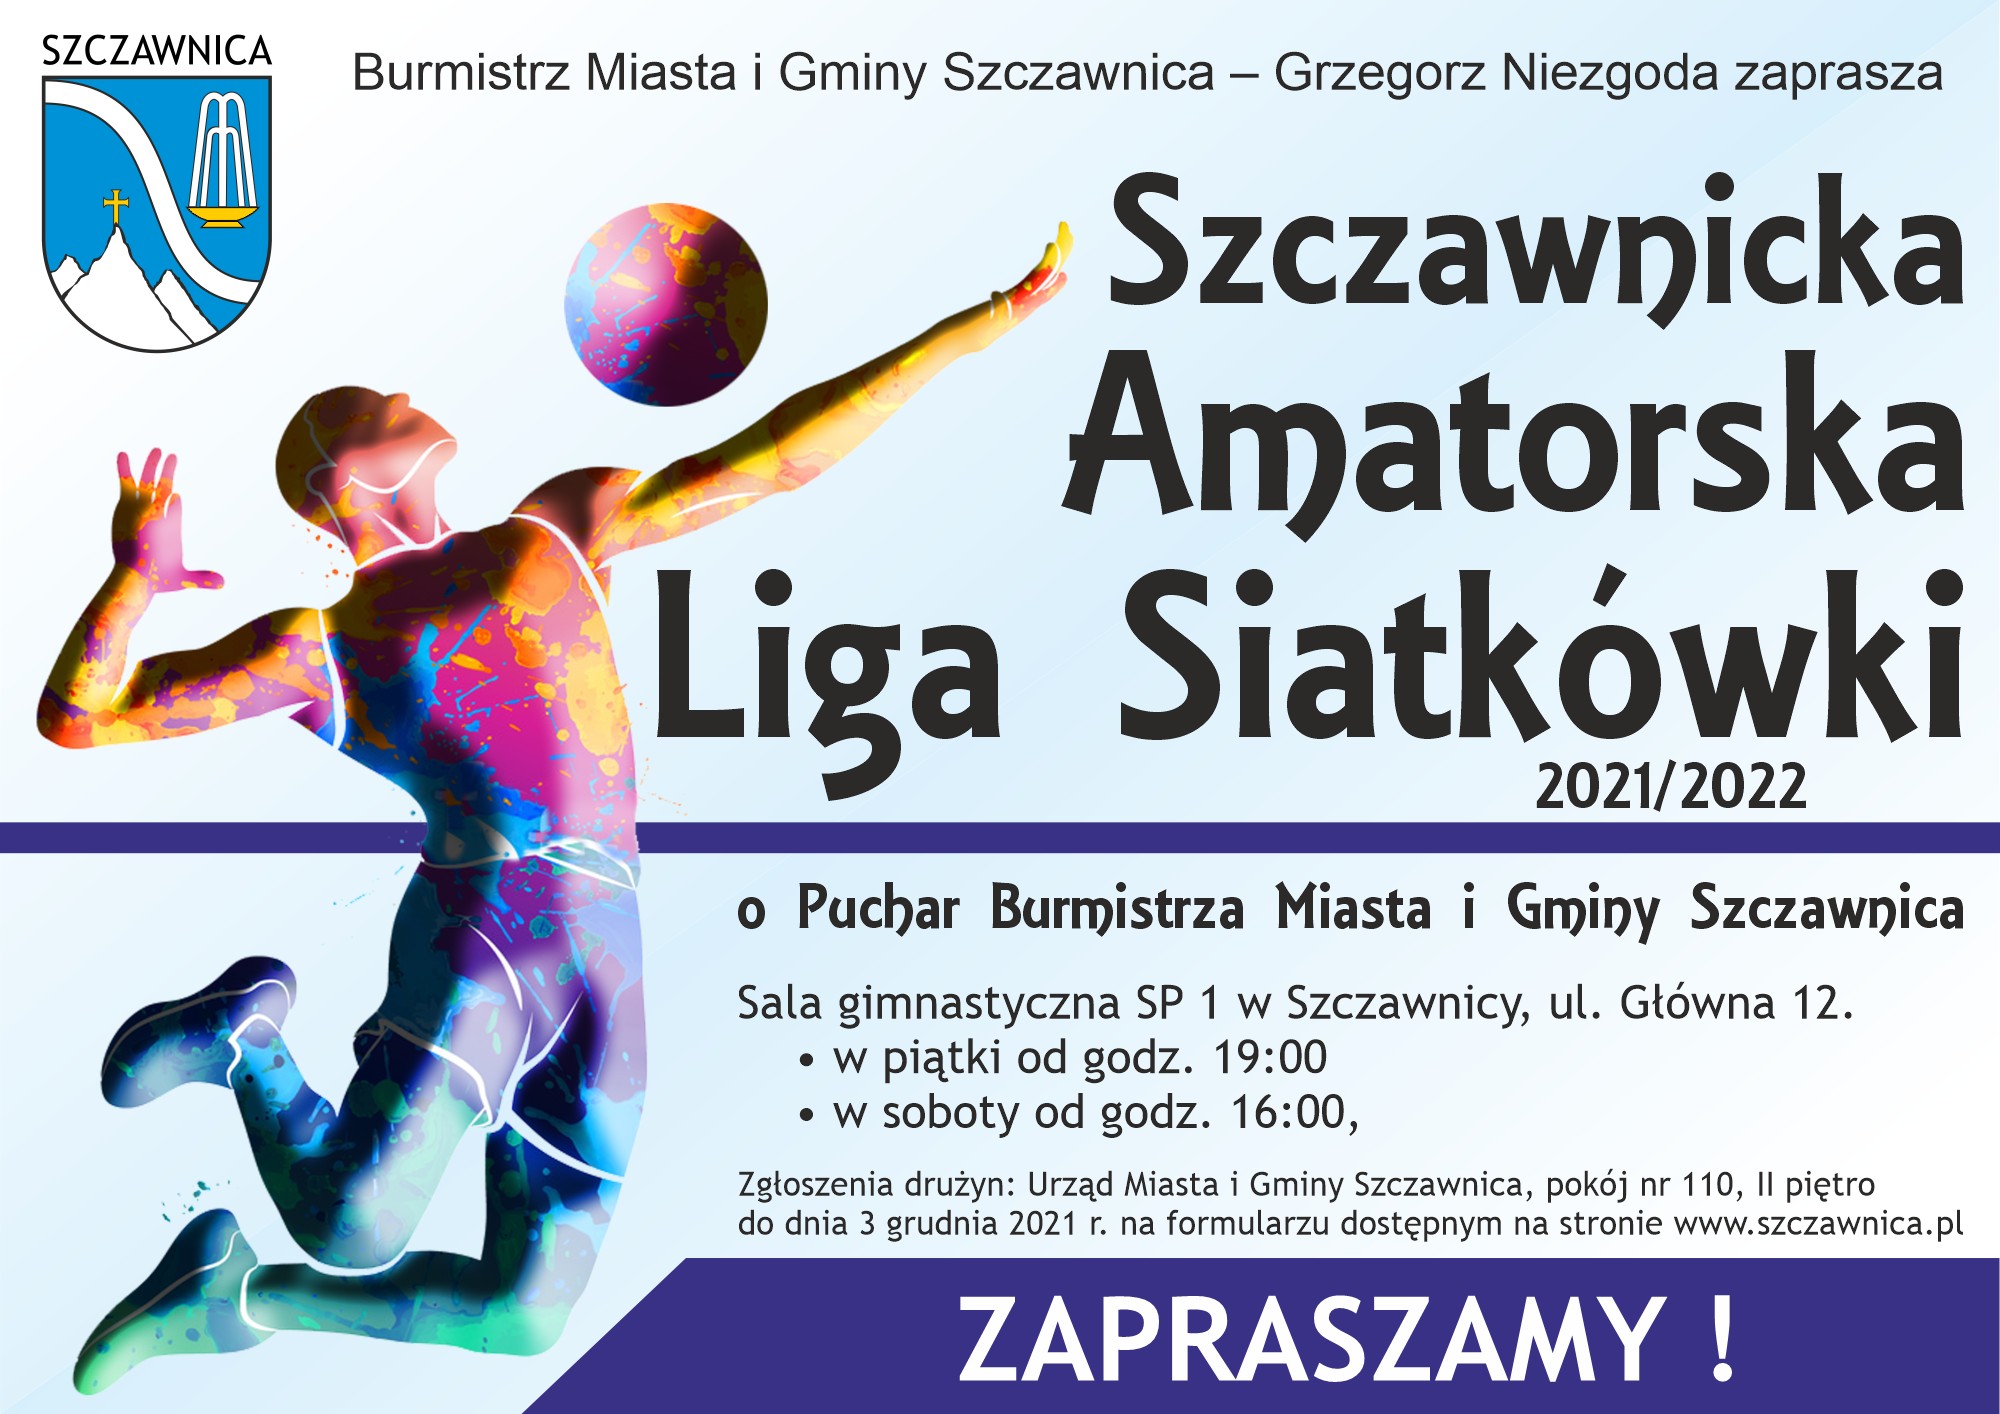 Szczawnicka Amatorska Liga Siatkówki 2021/2022